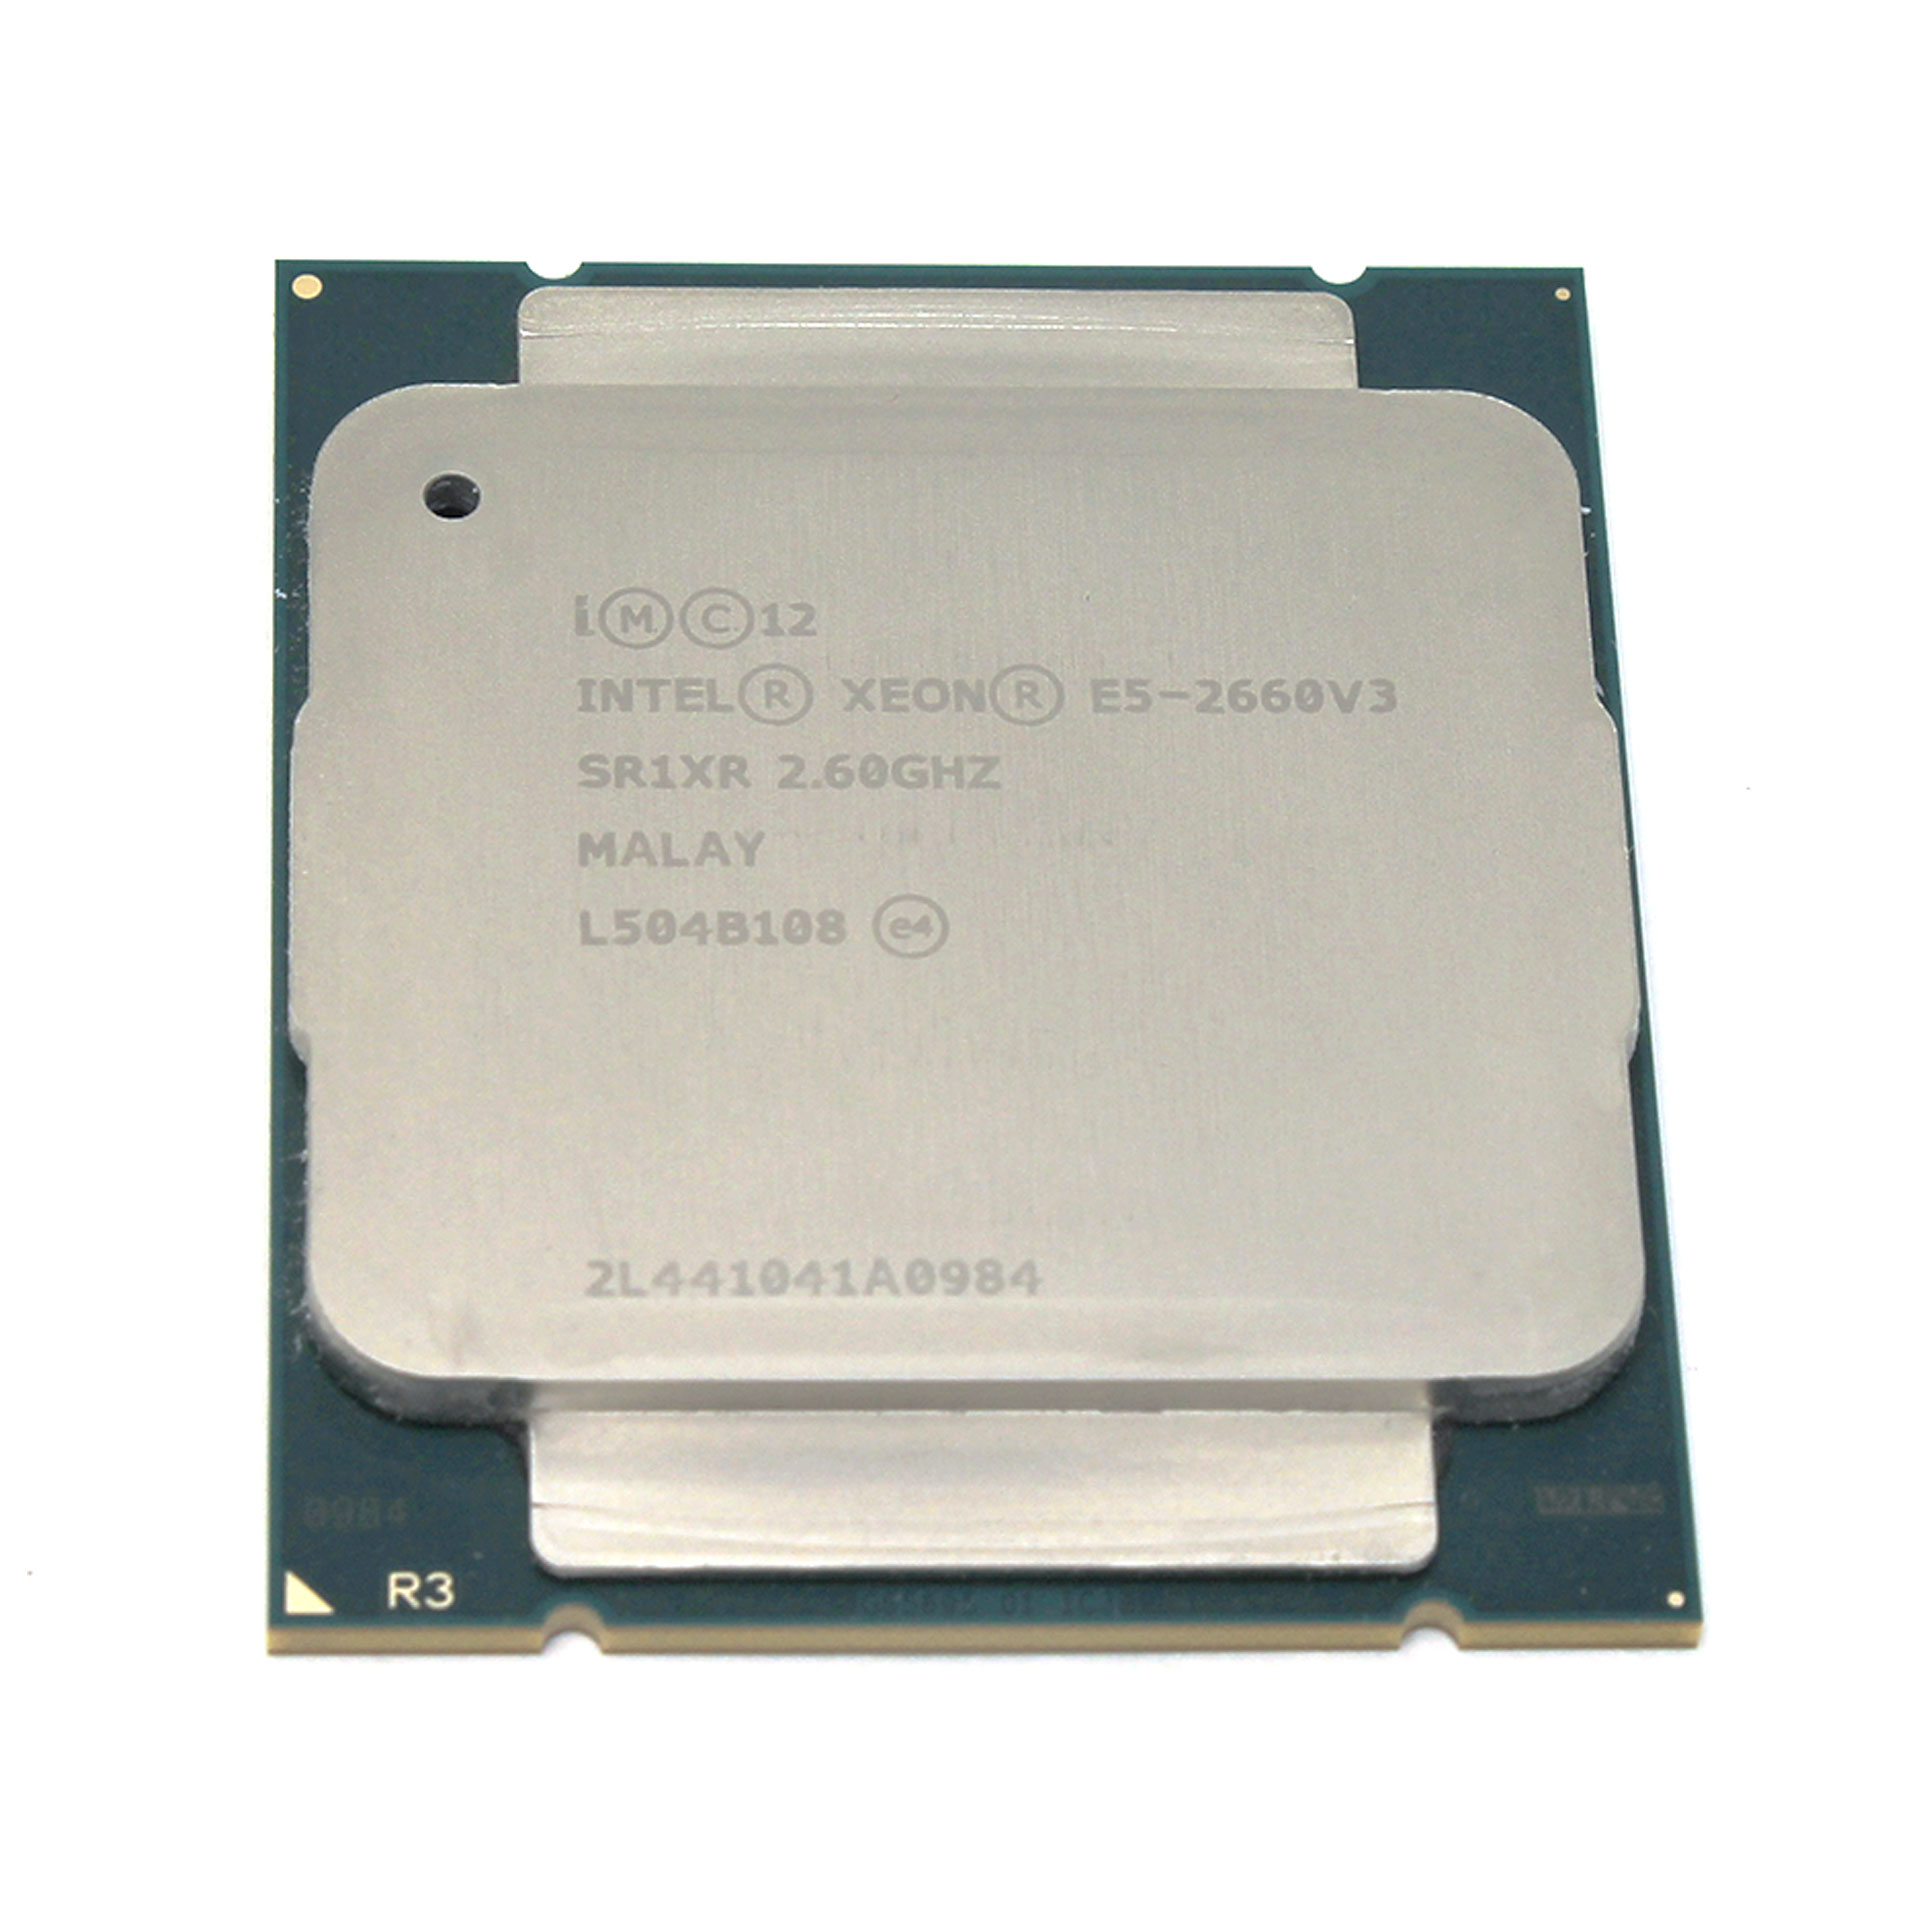 Intel XEON E5-2660v3 2.60 GHZ SR1XR 10 Core 25MB Processor CPU